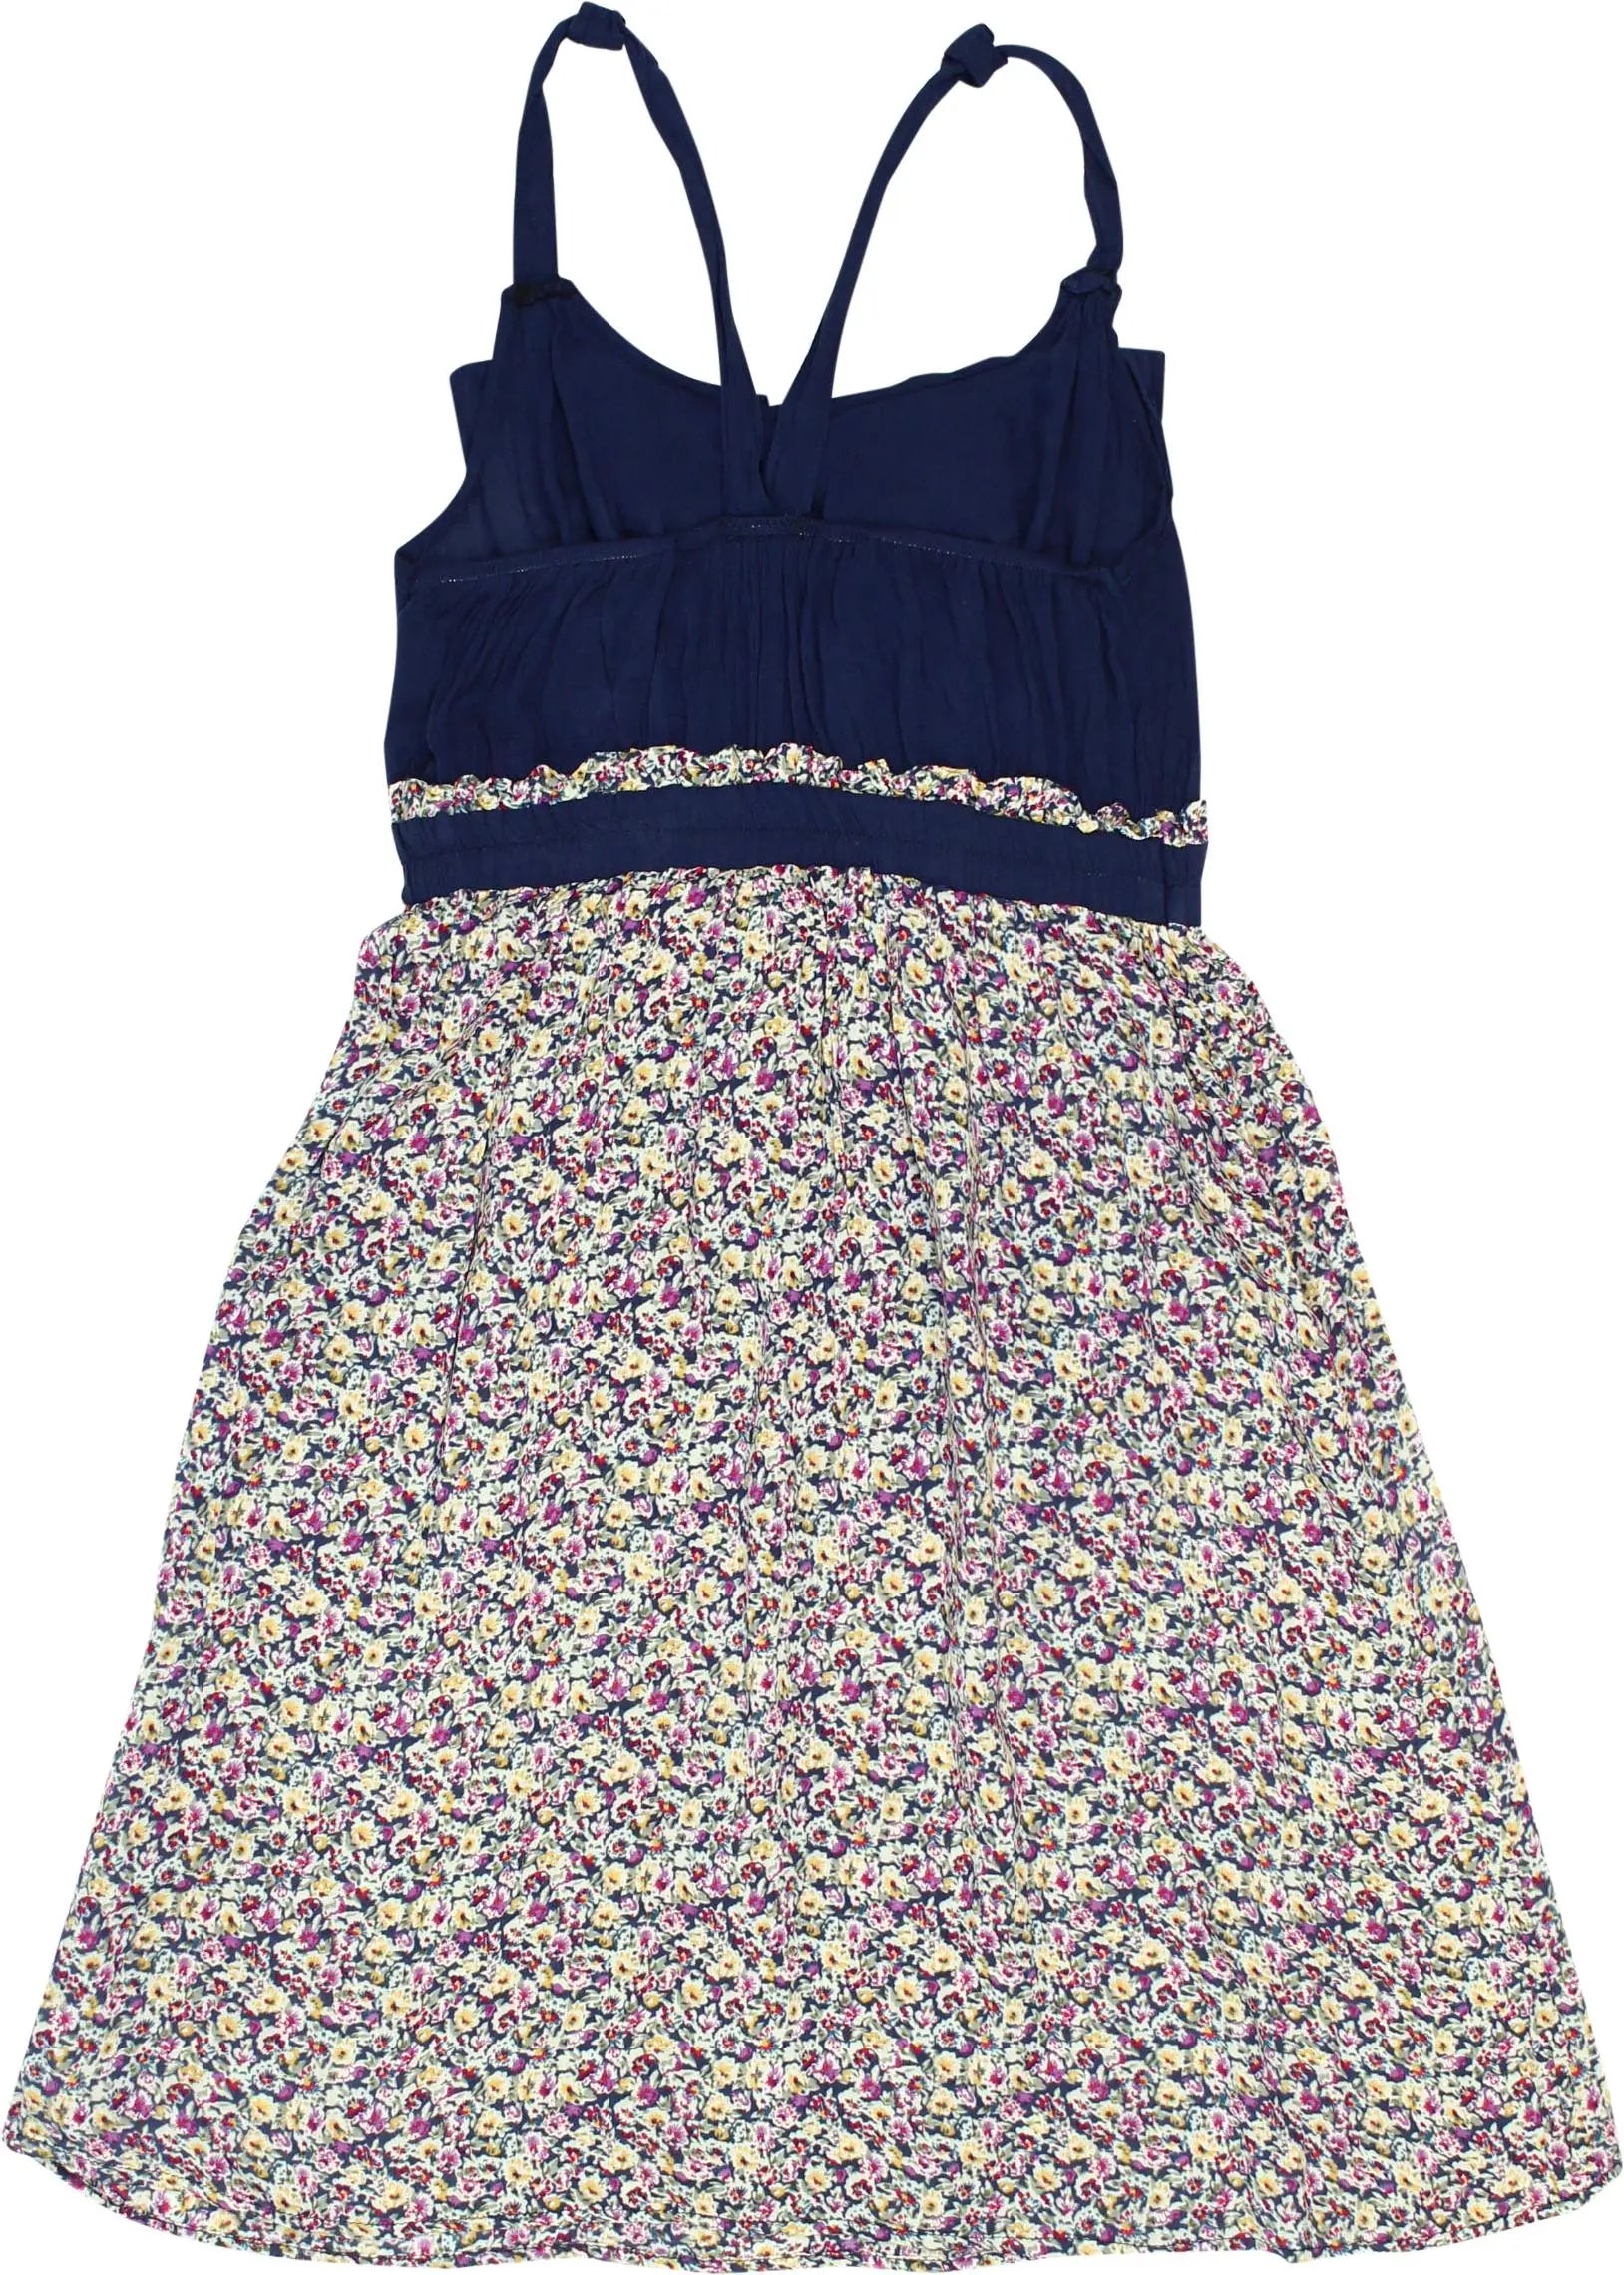 Daphnea - Floral Short Dress- ThriftTale.com - Vintage and second handclothing